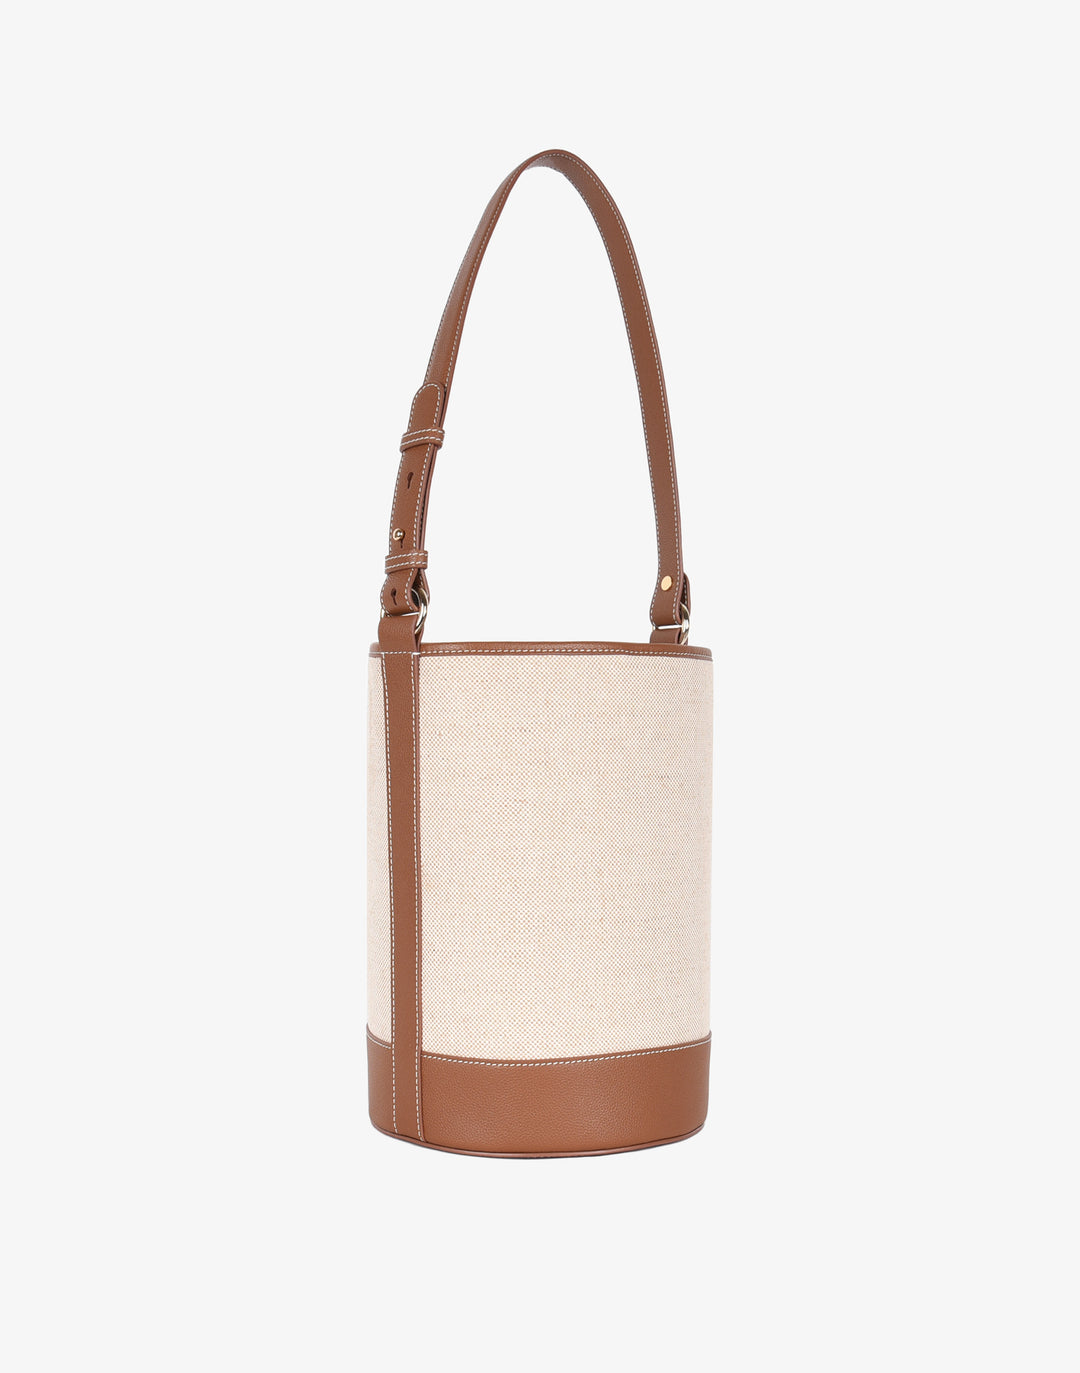 Hyer Goods cotton linen canvas Convertible Bucket Bag_linen tan#color_linen